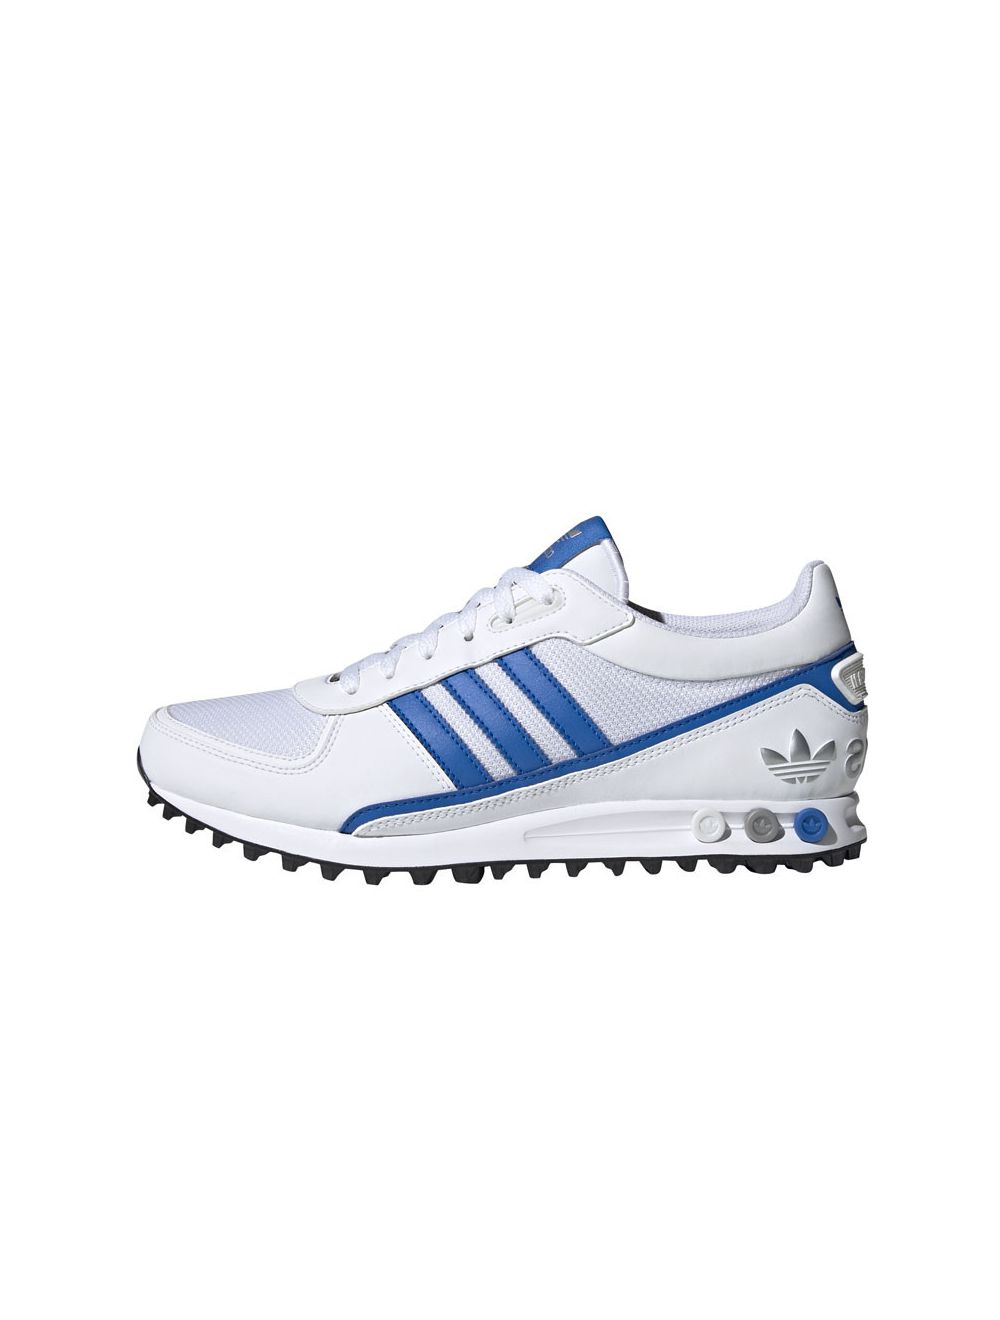 adidas la trainer white and blue